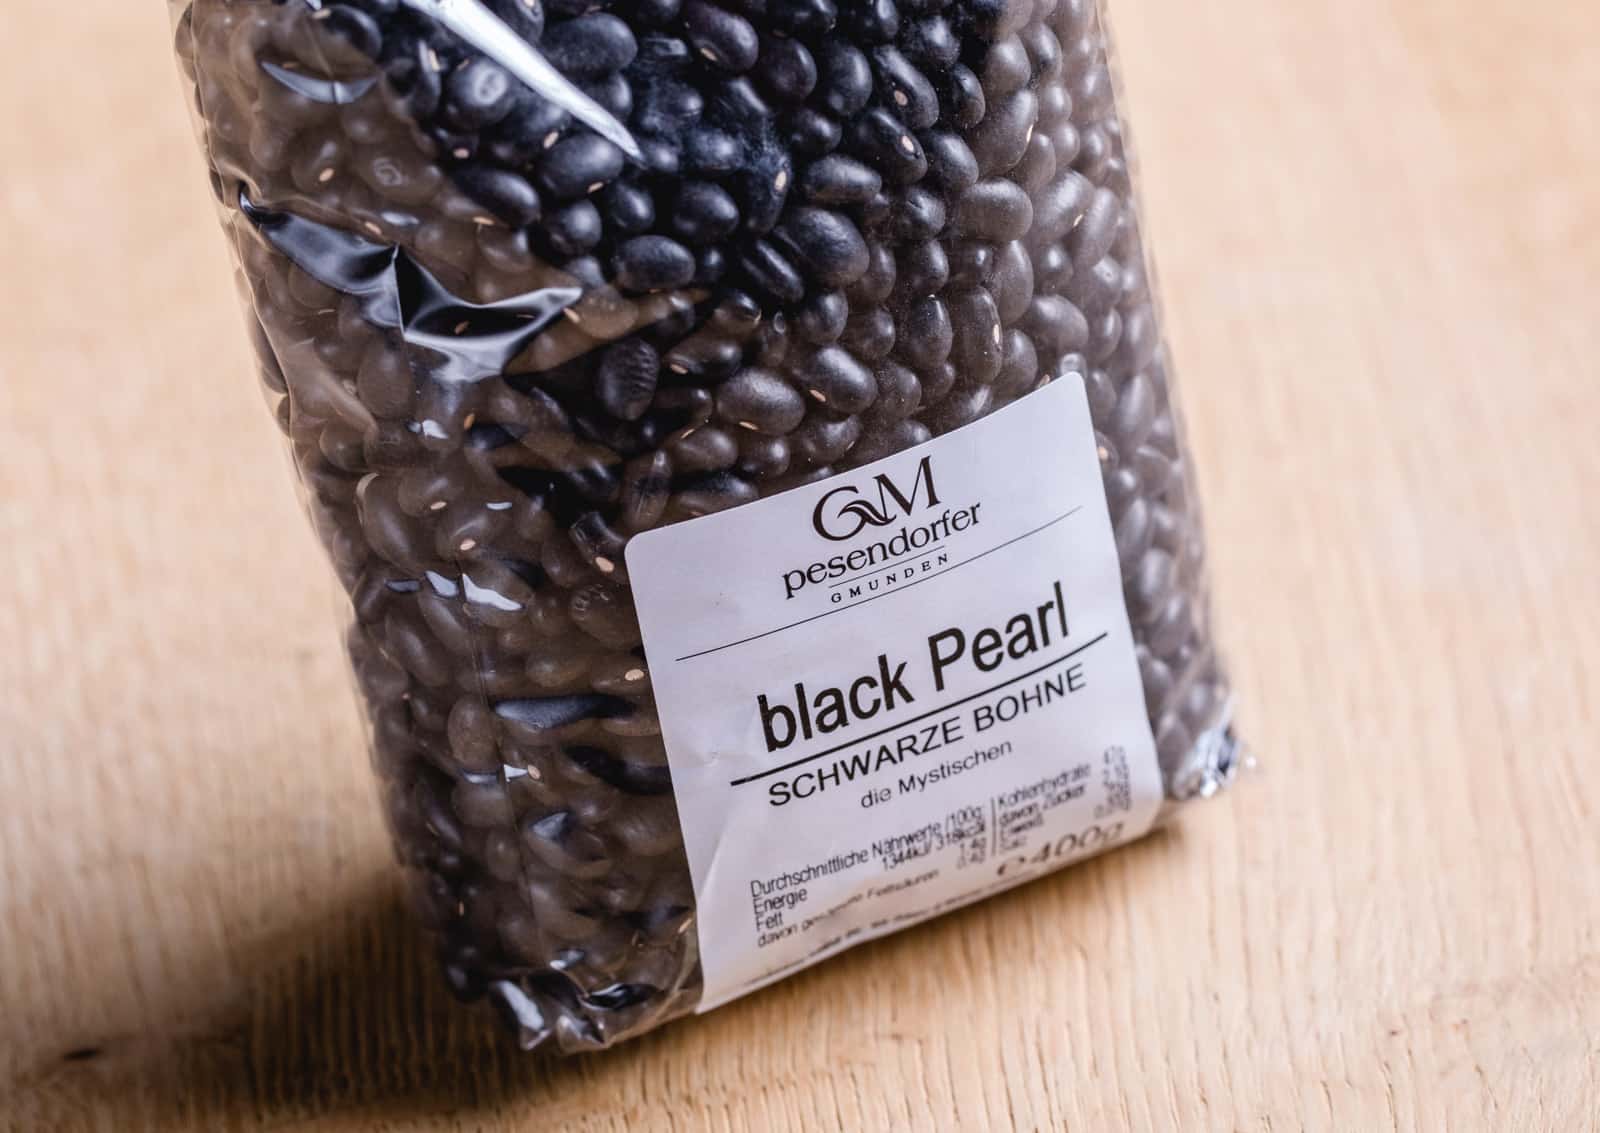 Black Pearl schwarze Bohnen